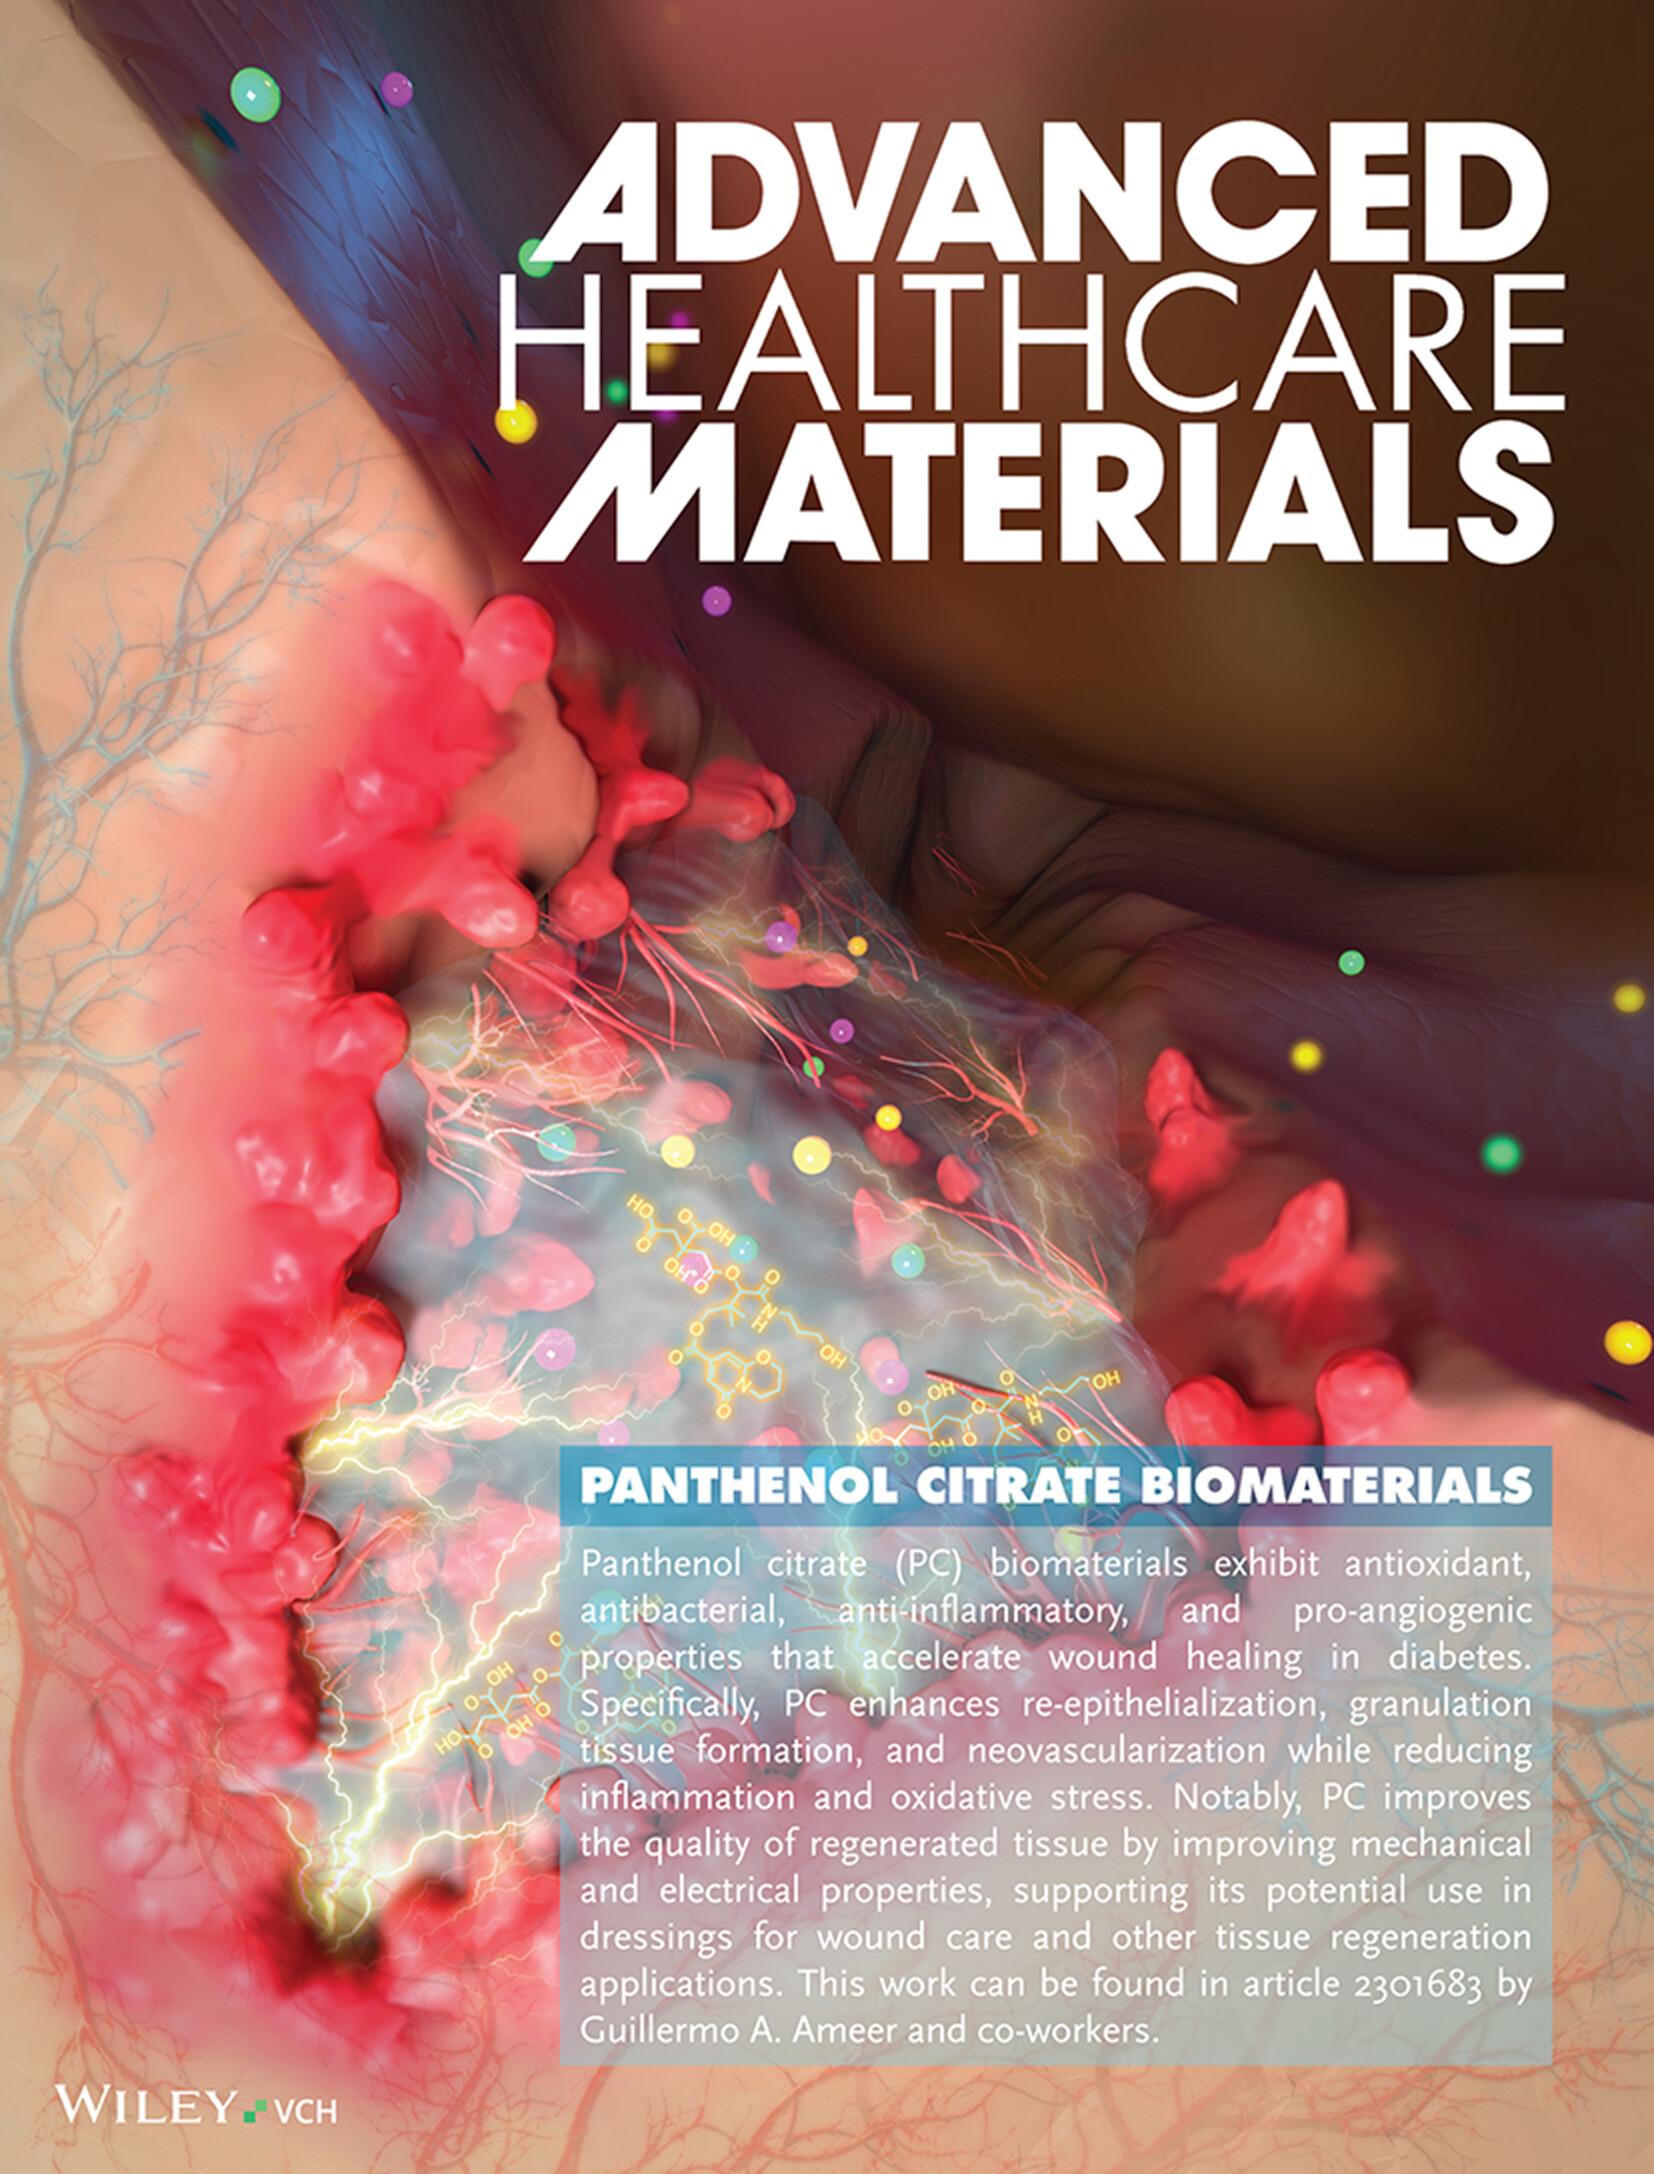 Advanced Healthcare Materials